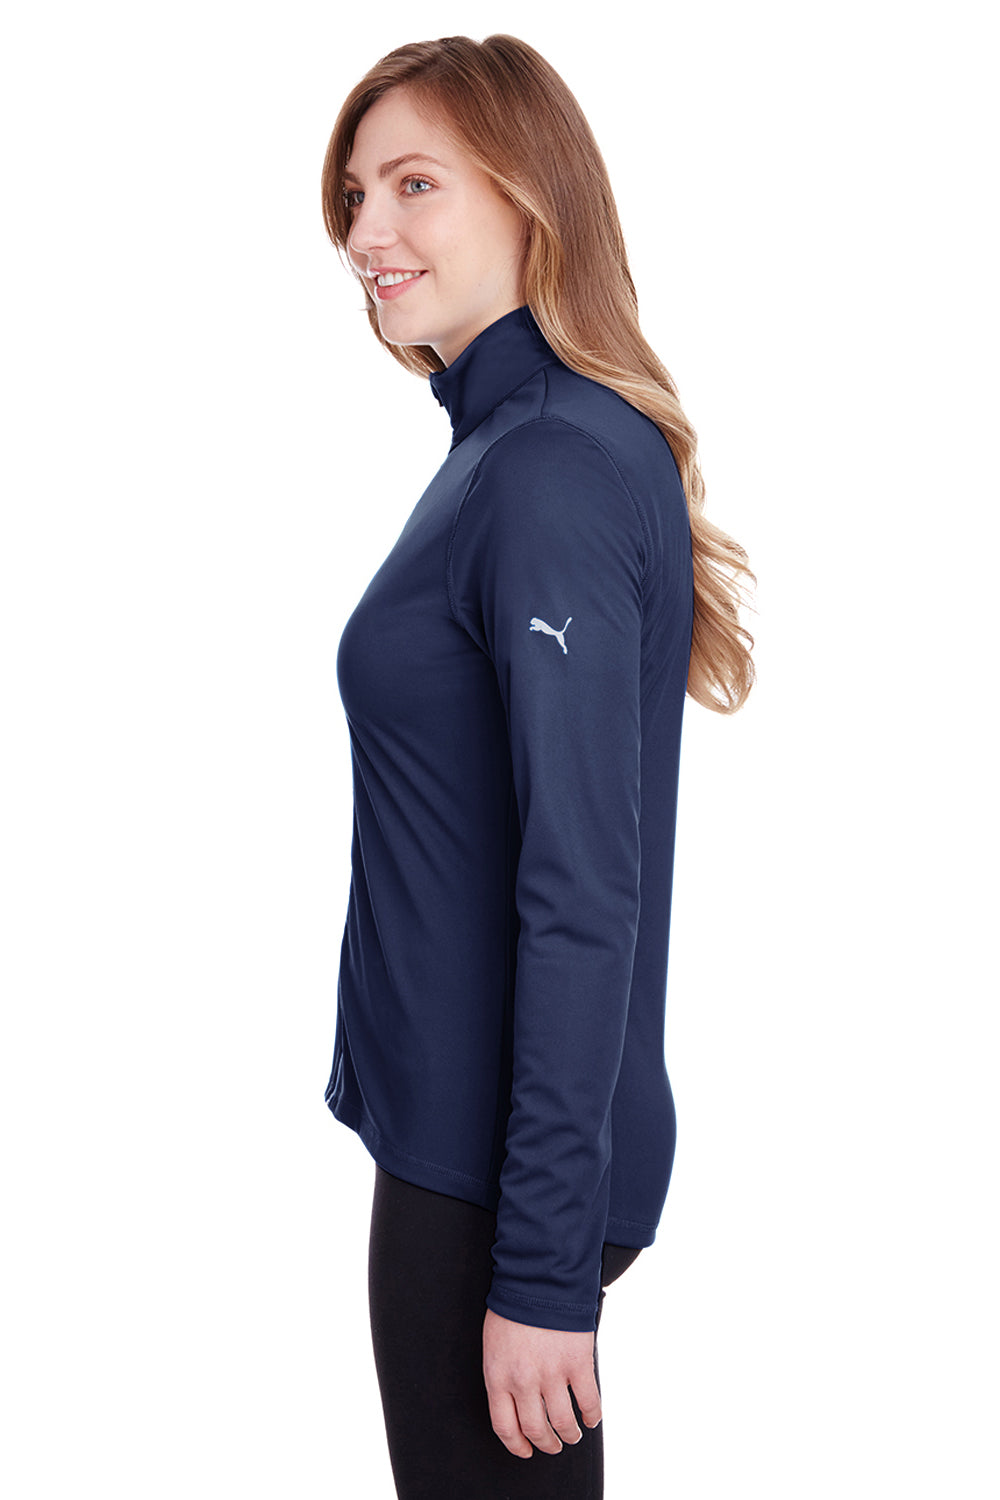 Puma 596803 Womens Icon Performance Moisture Wicking Full Zip Sweatshirt Navy Blue Side